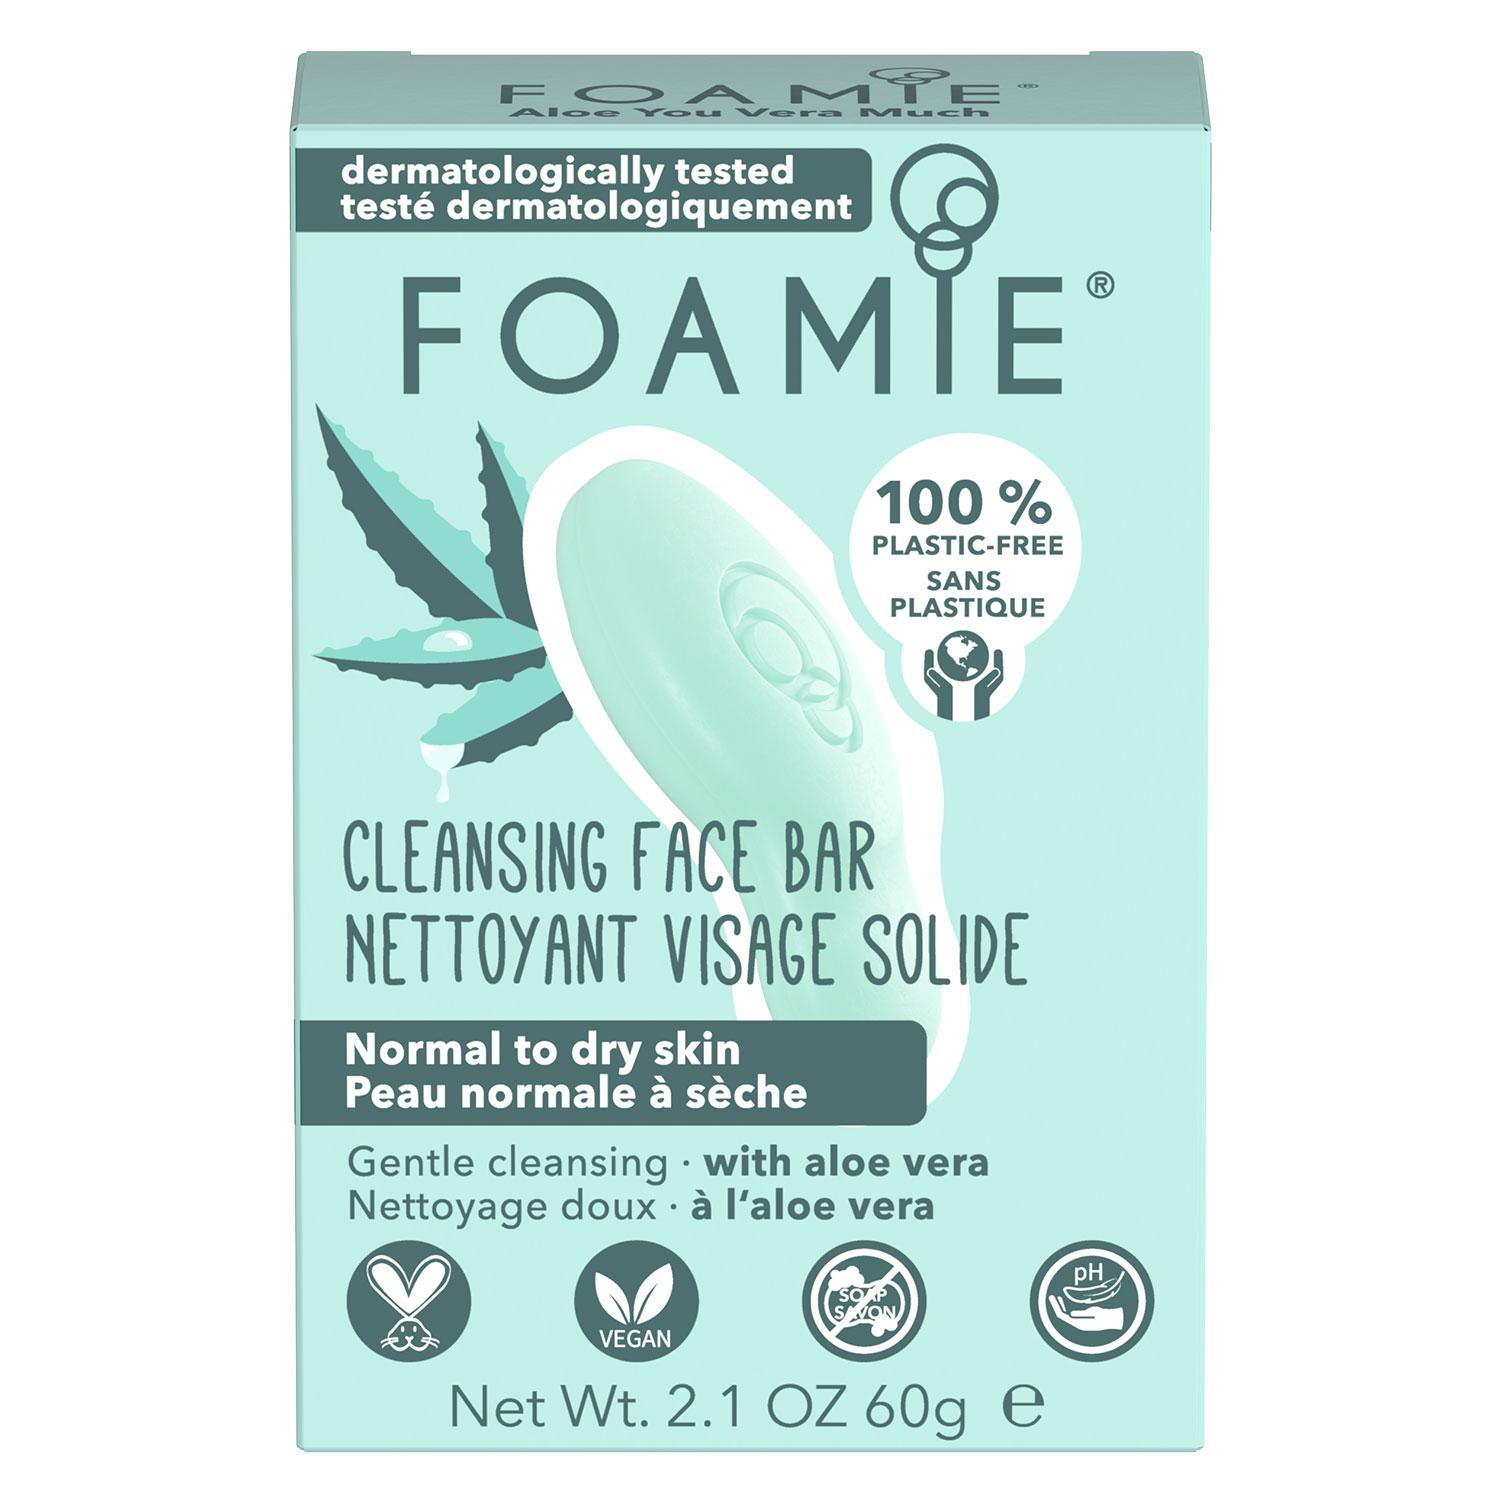 Foamie - Nettoyage solide du visage Aloe You Vera Much